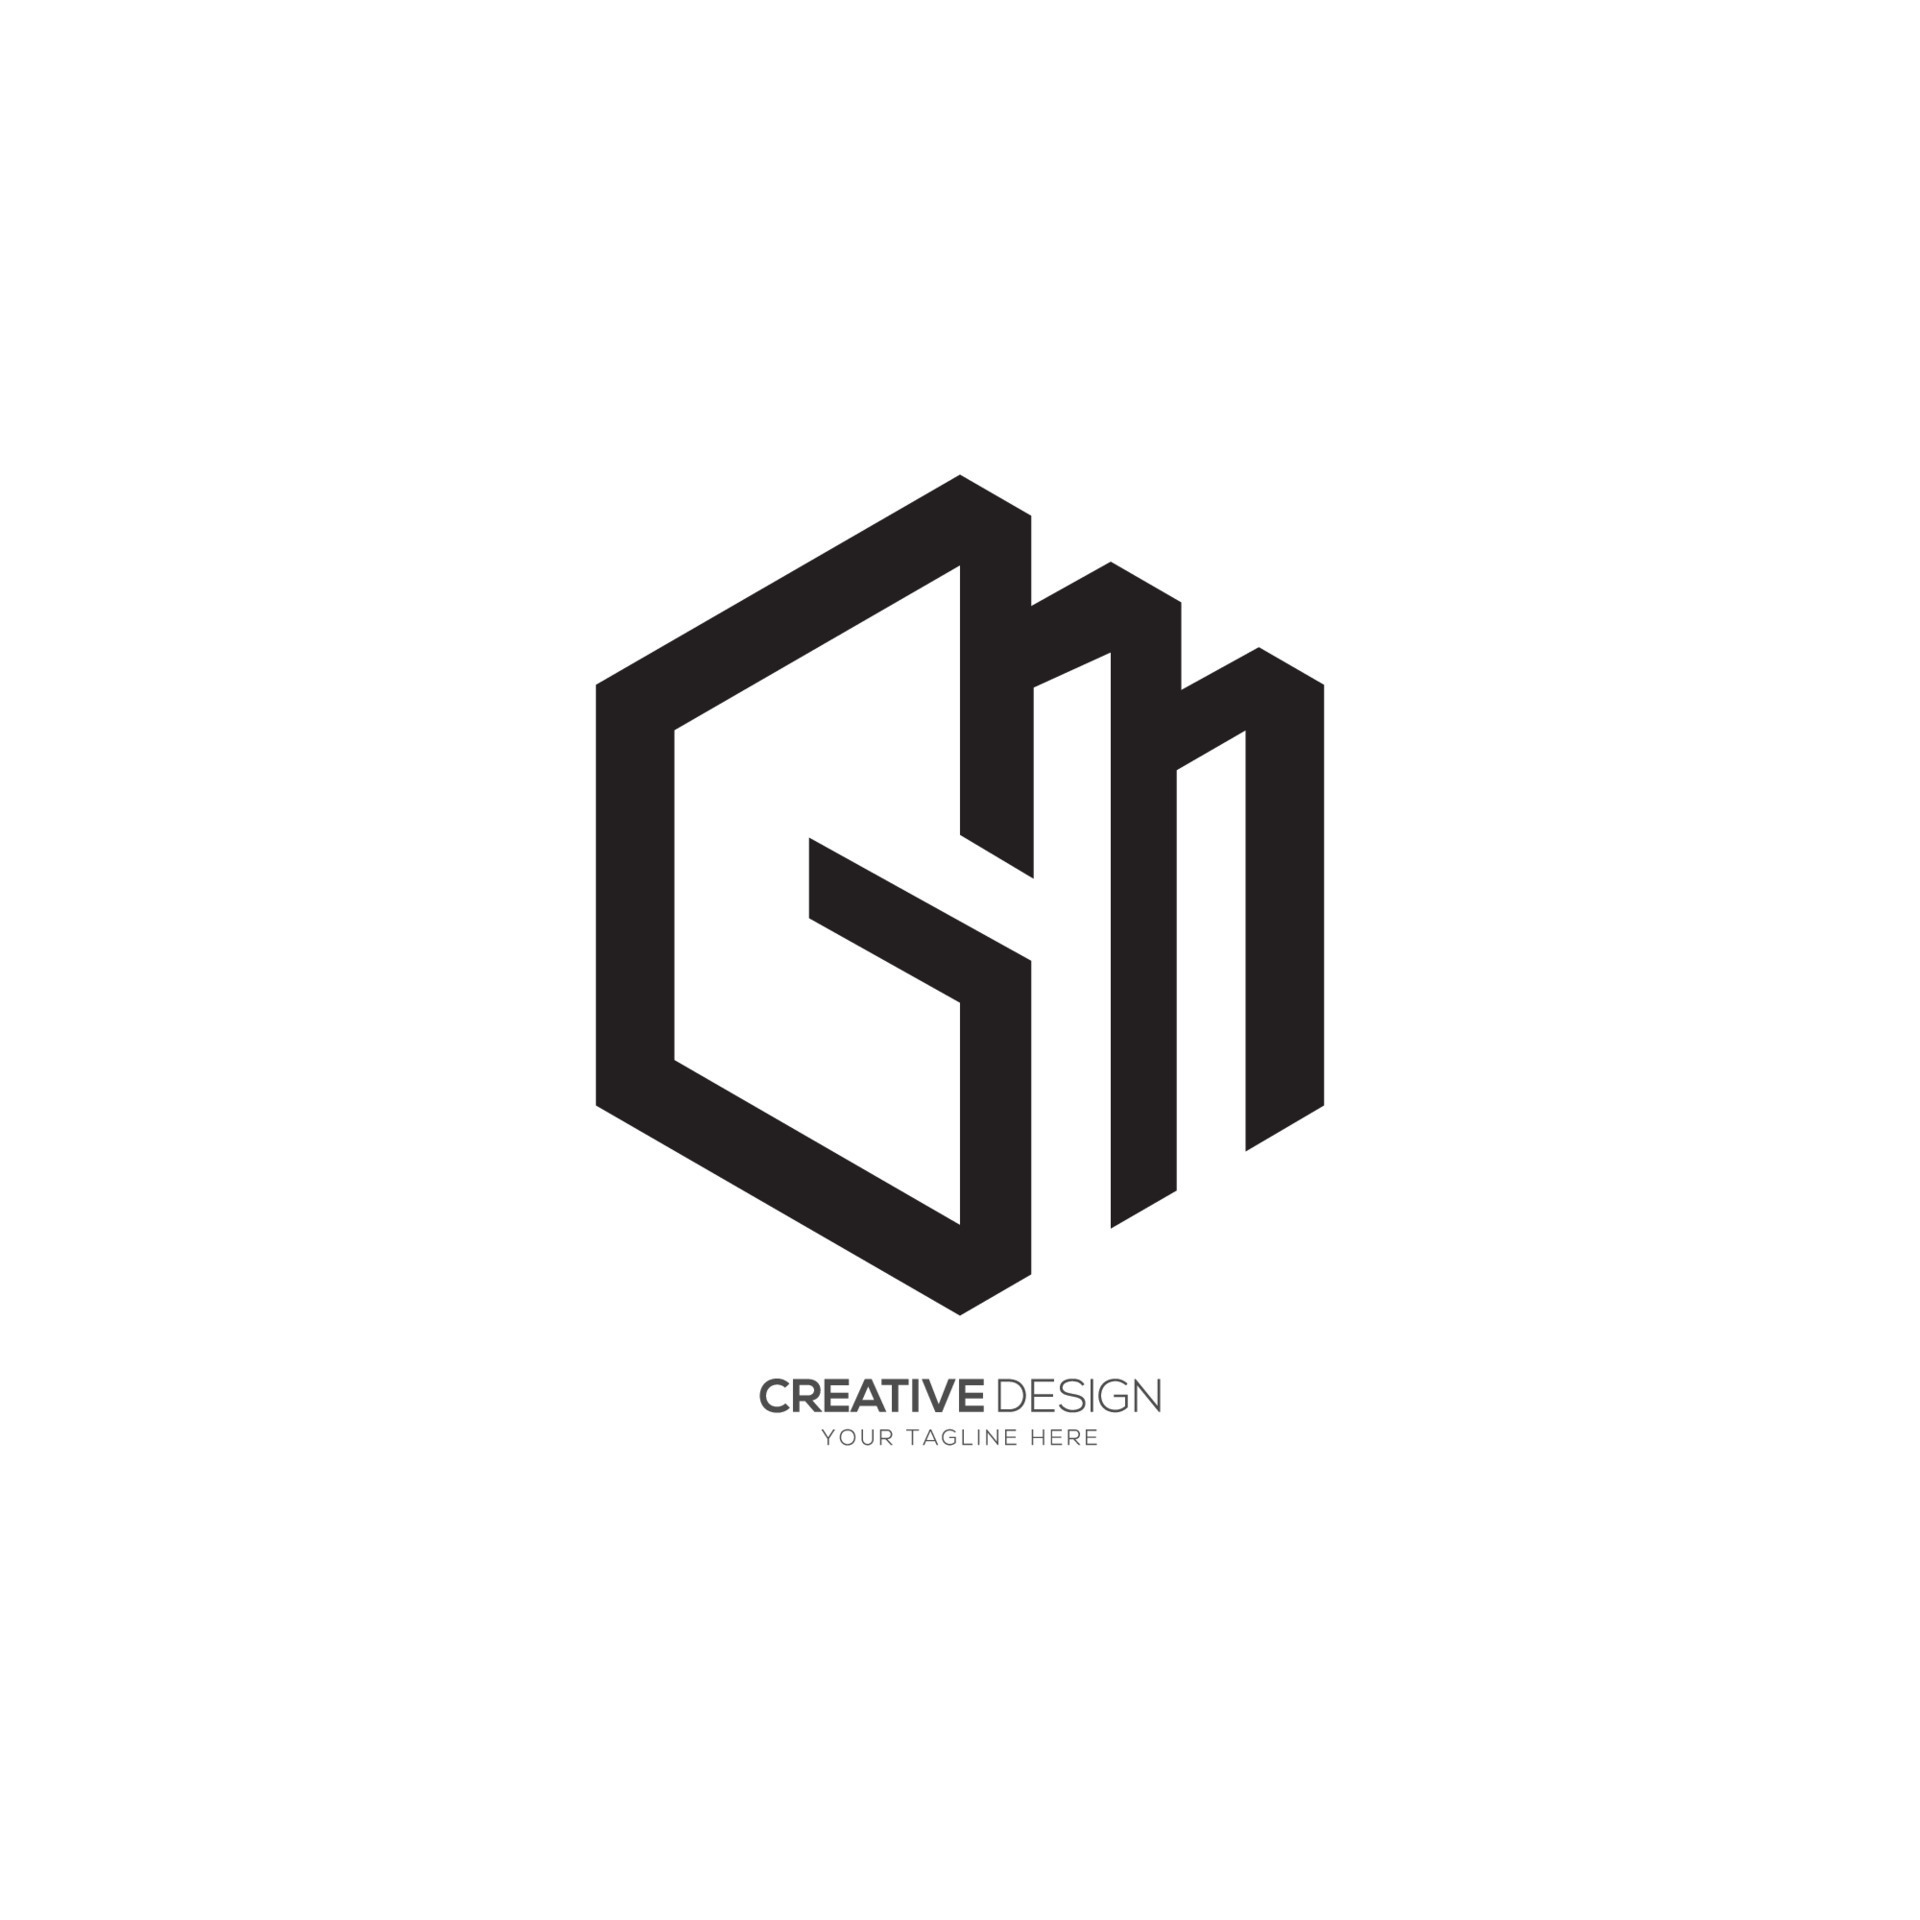 Premium Vector  Creative letter gm monogram hexagon logo design icon  template white and black background